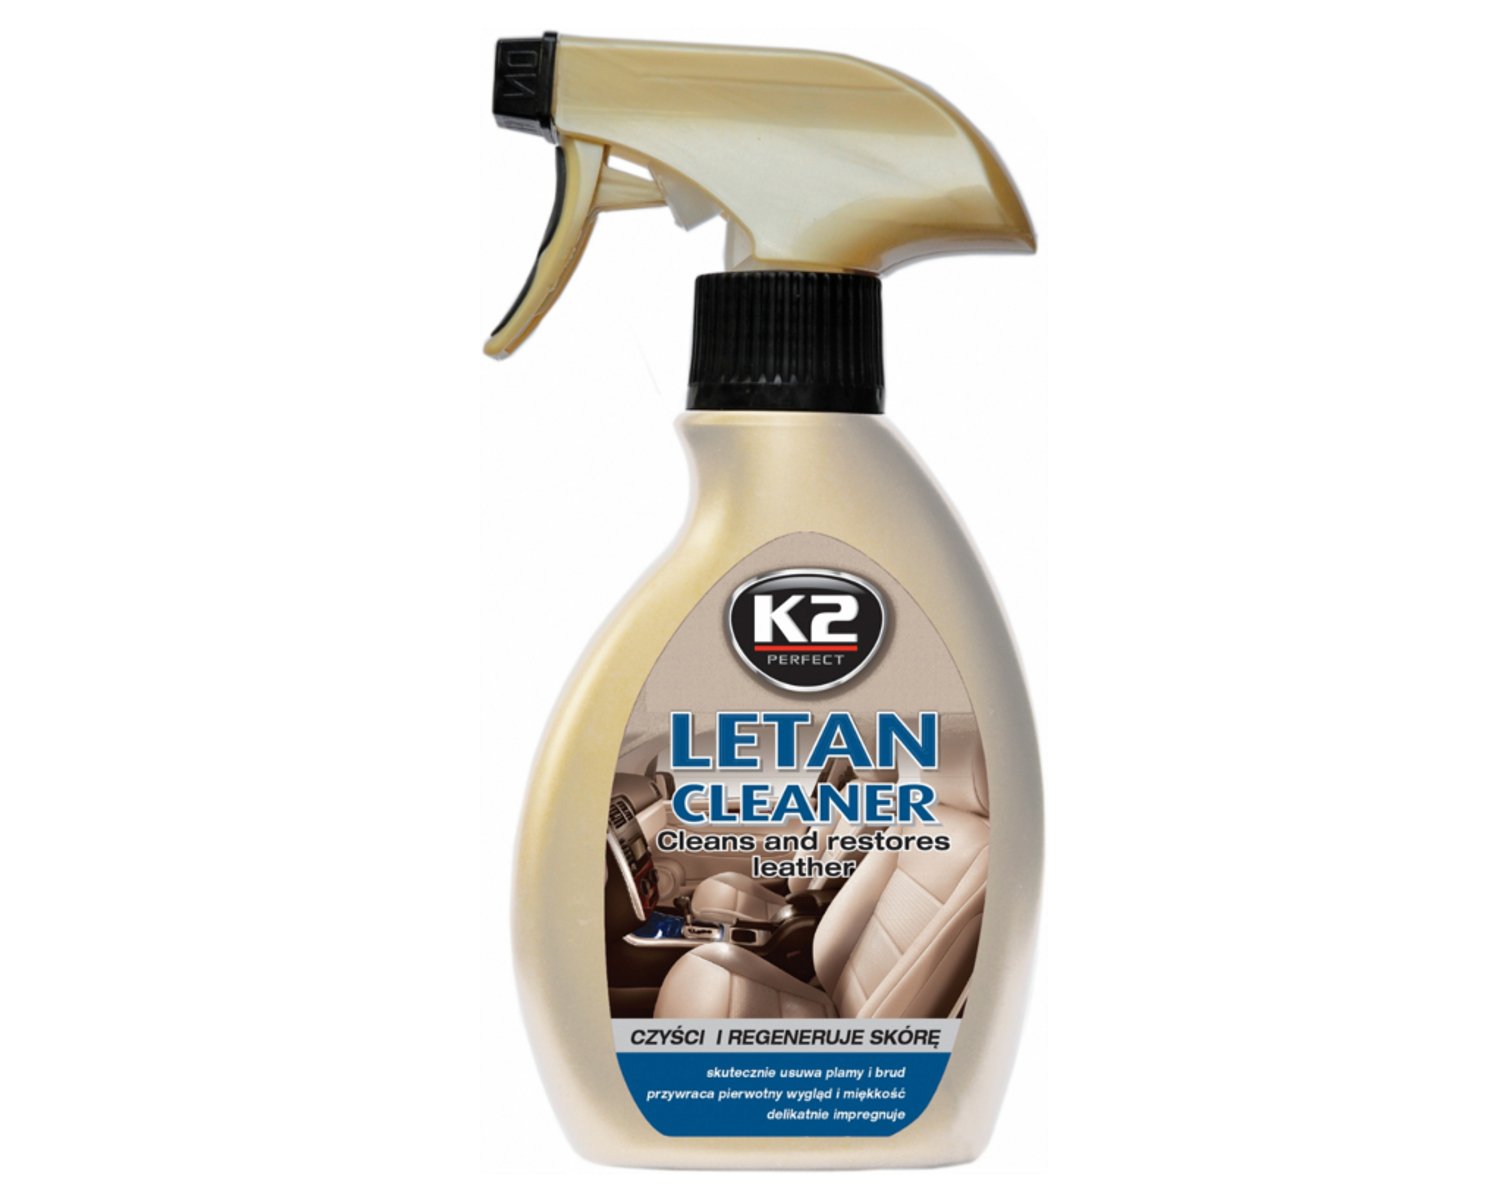 Очиститель кожи Kangaroo 300 мл. Очиститель кожи k2 Letan Cleaner спрей 250 мл /12204/. Cleaner 2 очиститель.. Ek1171 k2 очистители k2. Какое средство для очистки кожи